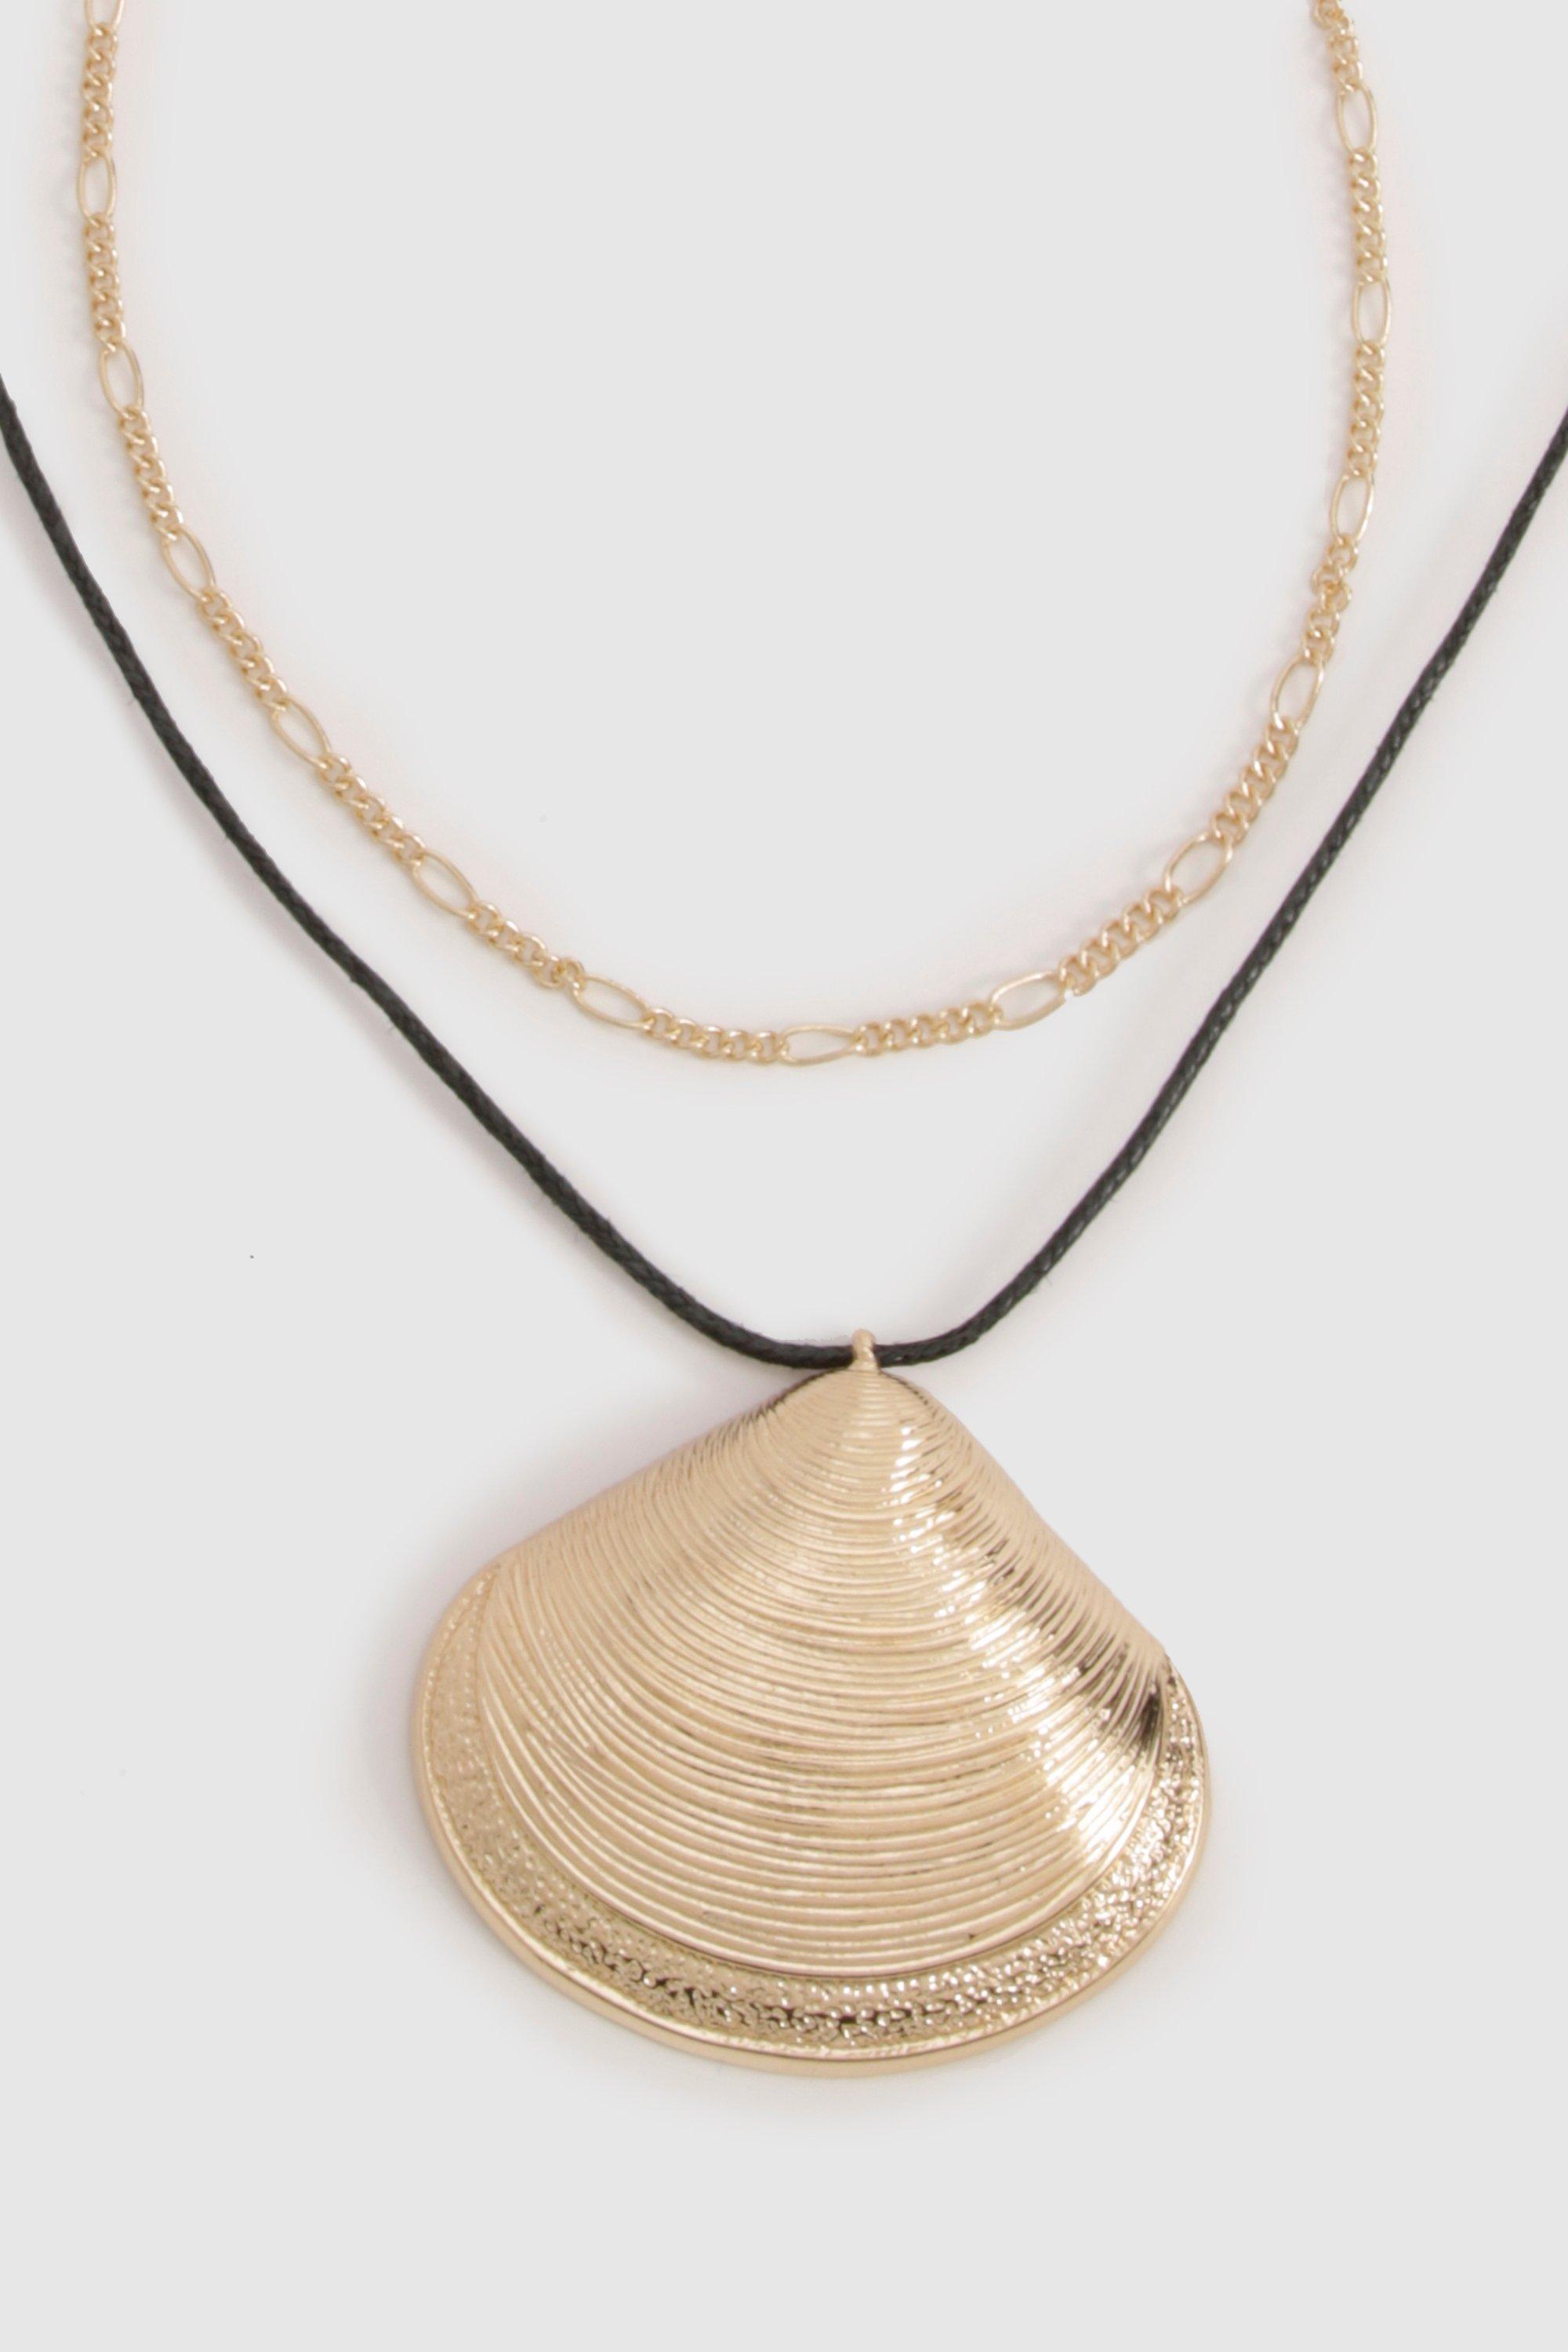 Image of Seashell Pendant Rope Layered Necklace, Metallics